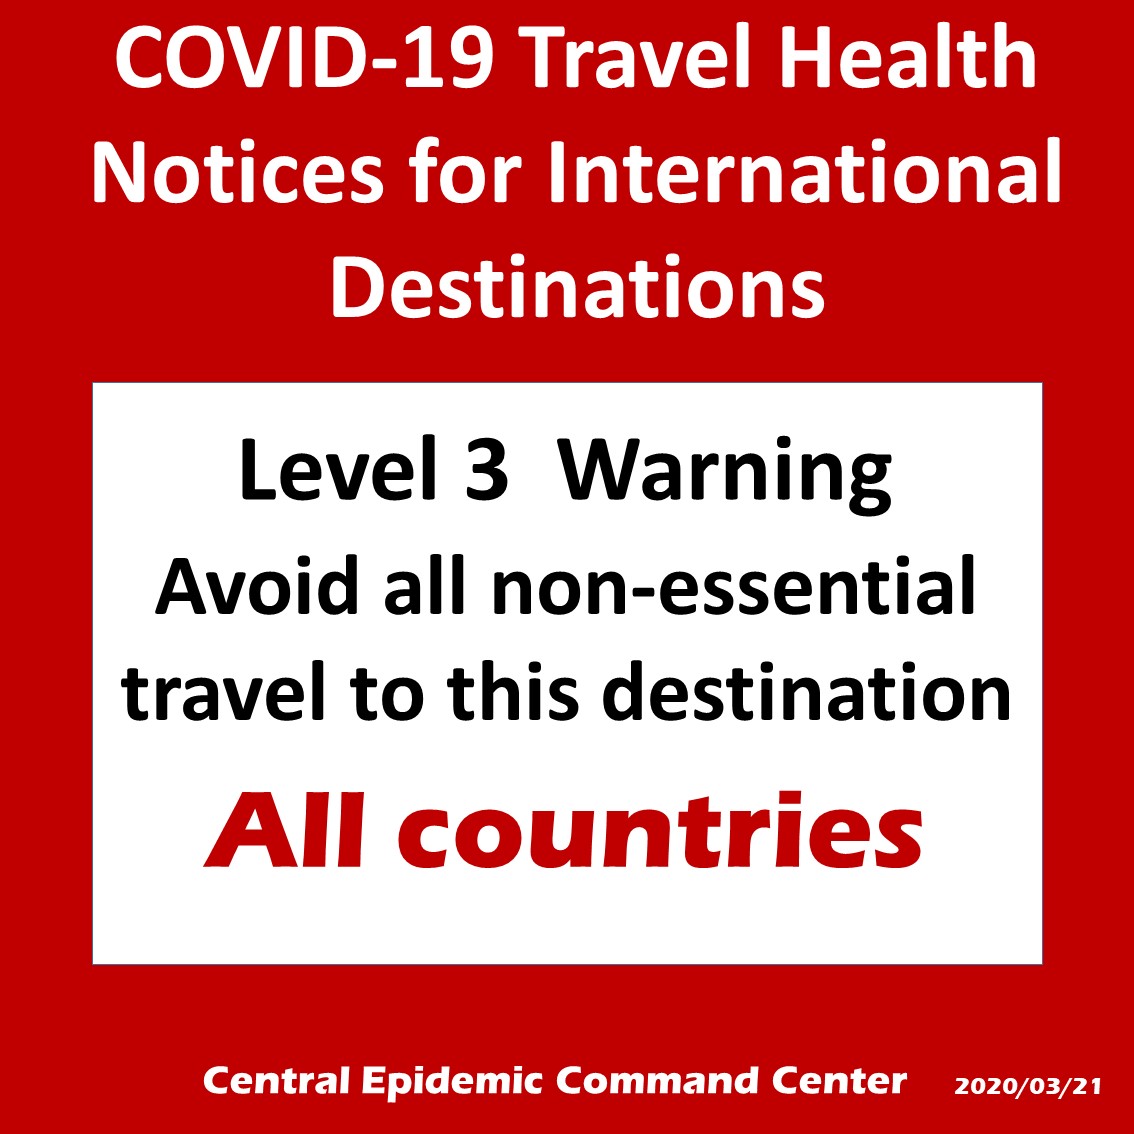 Travel Health Notices for International Destinations